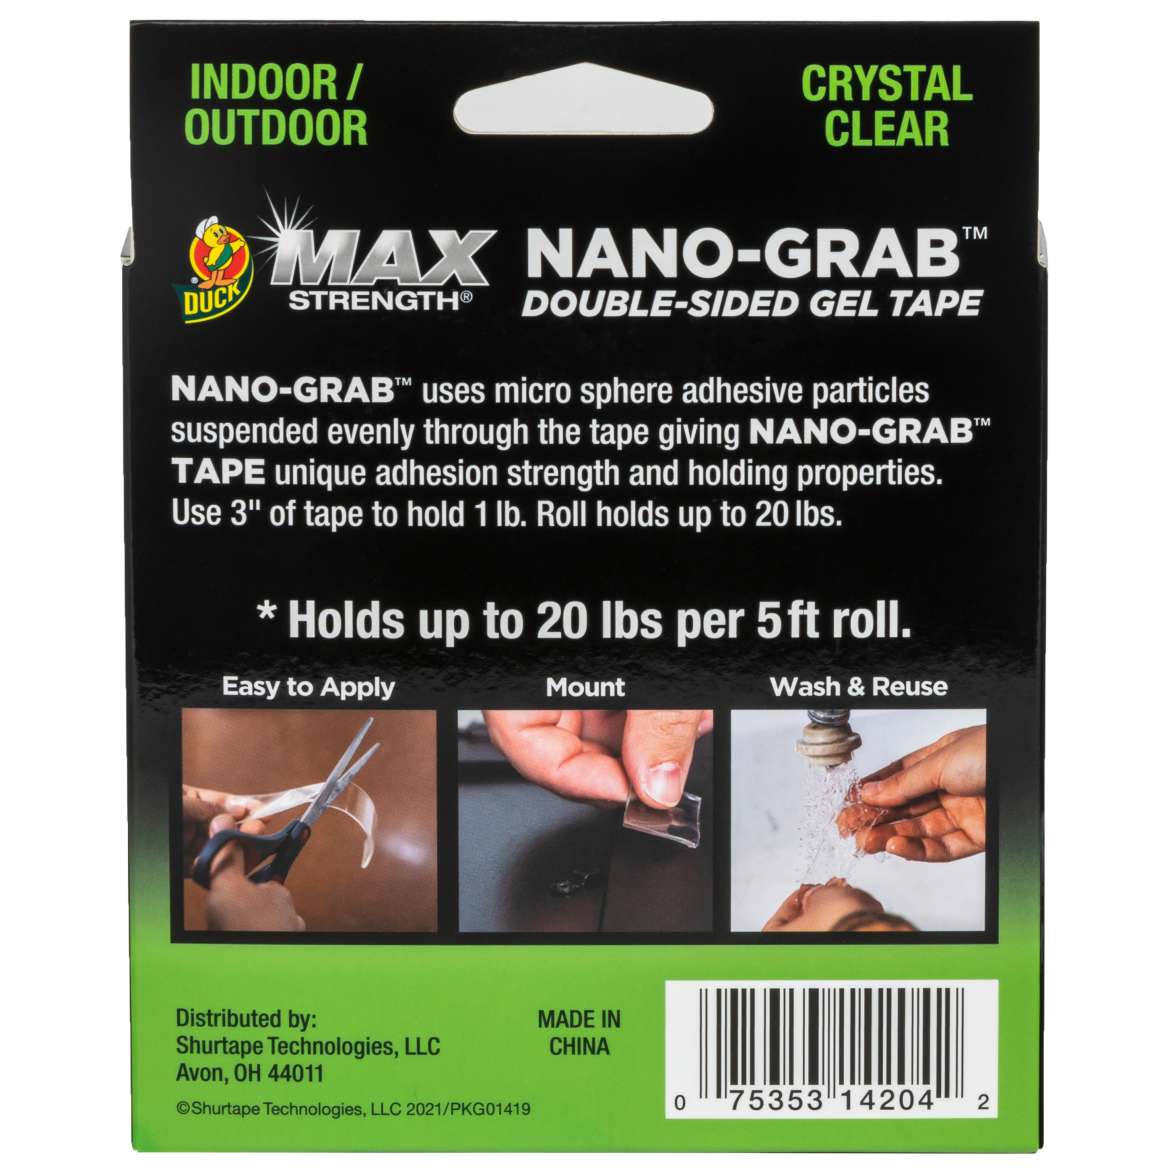 Duck Max Strength® Nano-Grab® Gel Tape